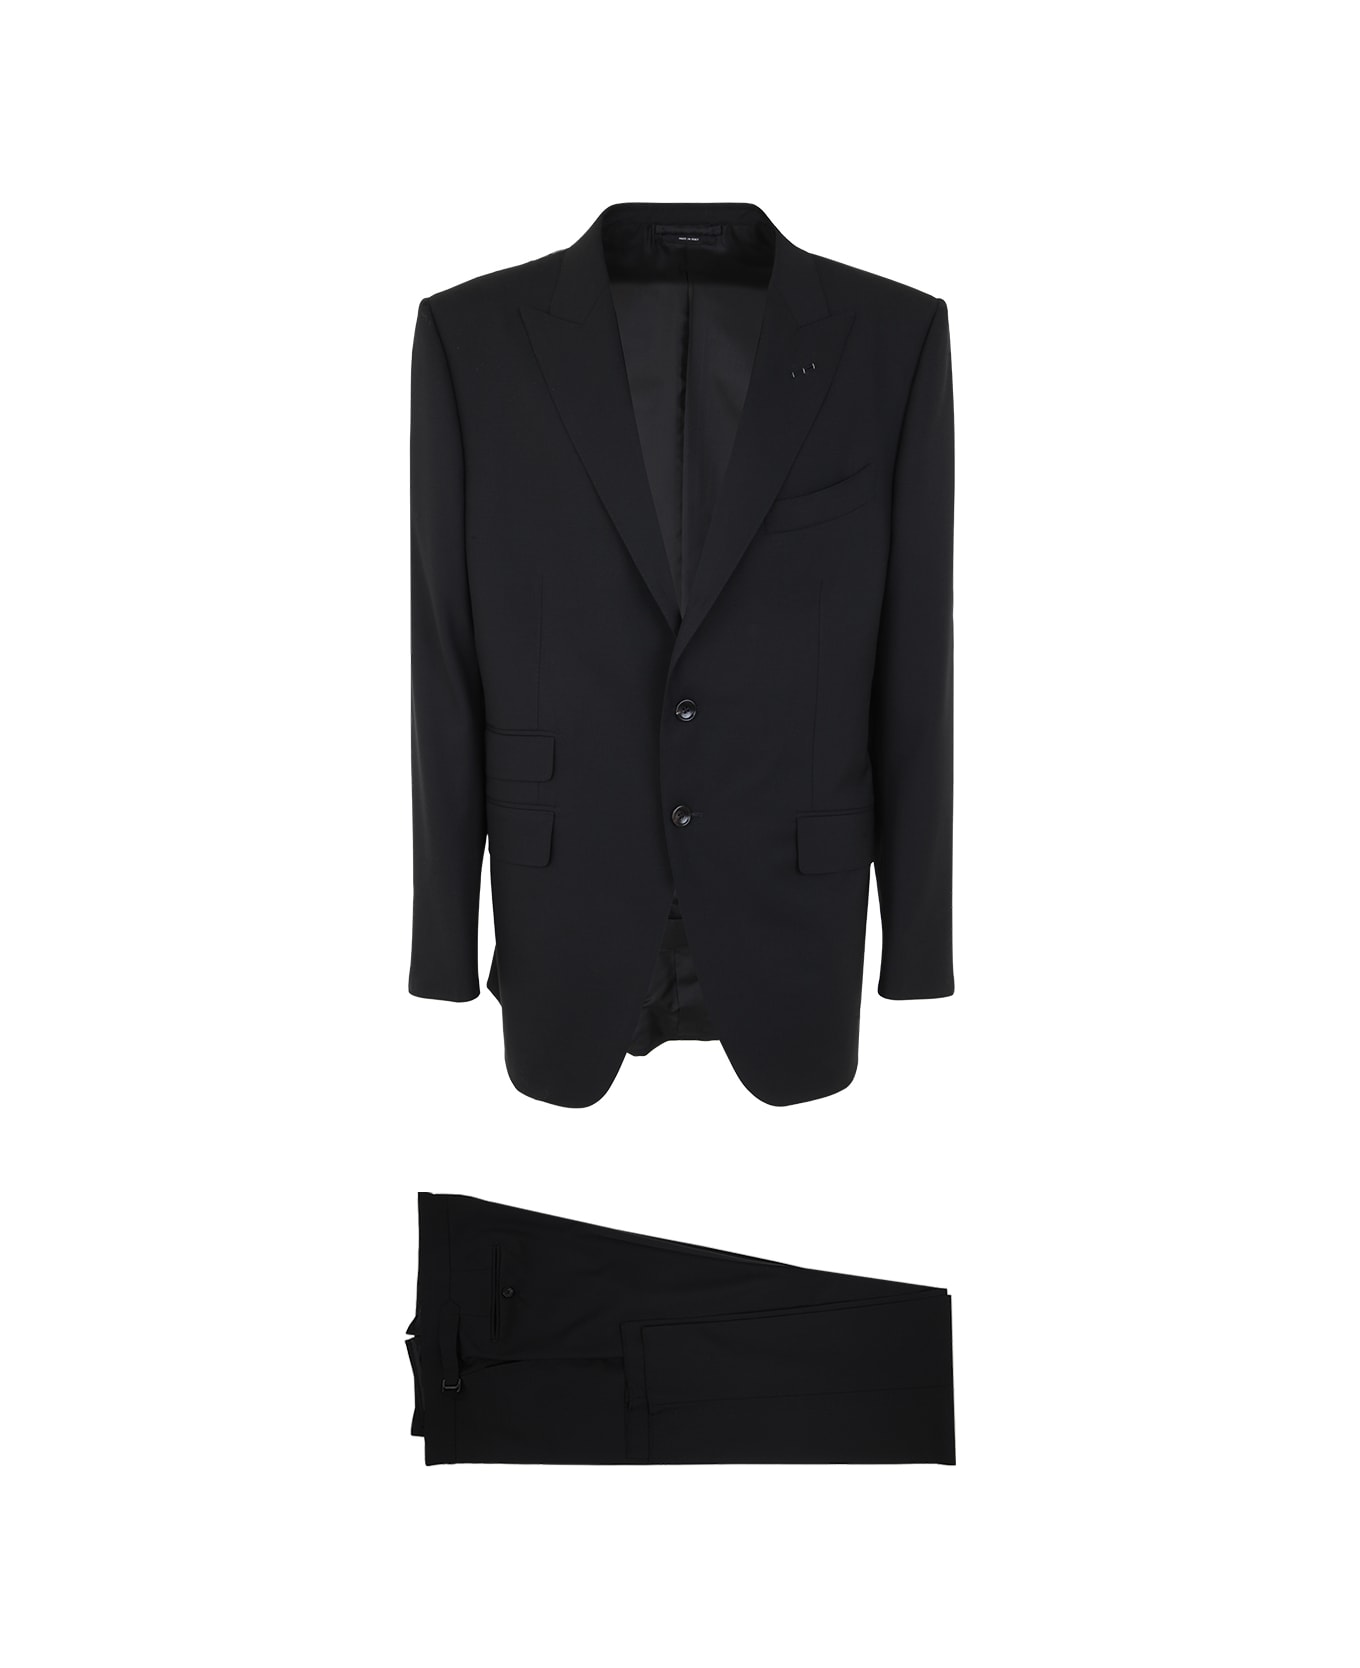 Tom Ford Super 120s Plain Weave O Connor Suit - Black